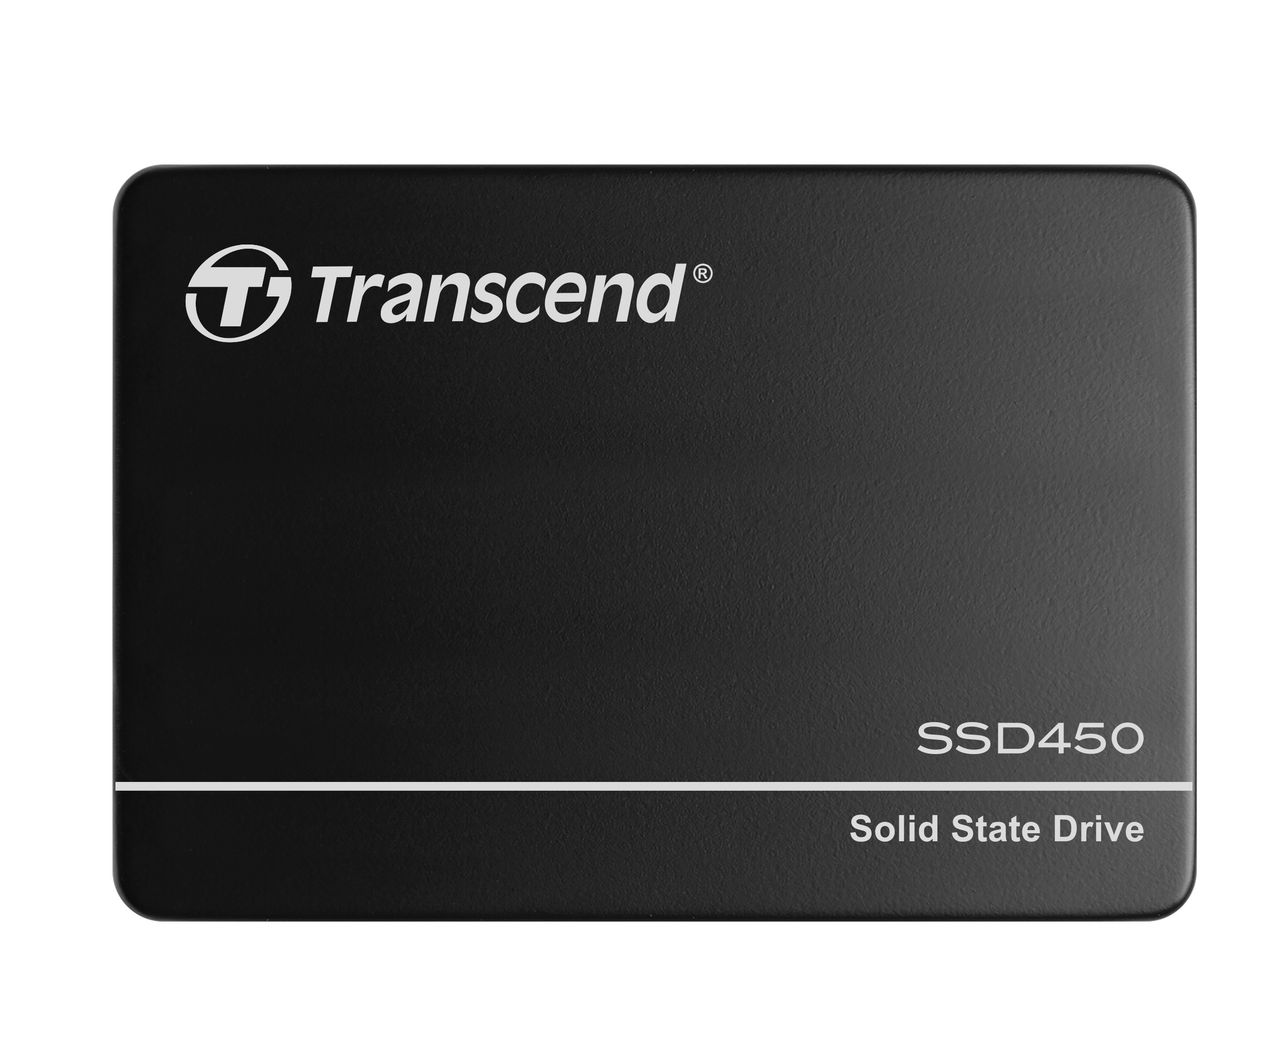 TRANSCEND prezentuje nowy dysk SSD oparty na kościach 3D NAND TLC